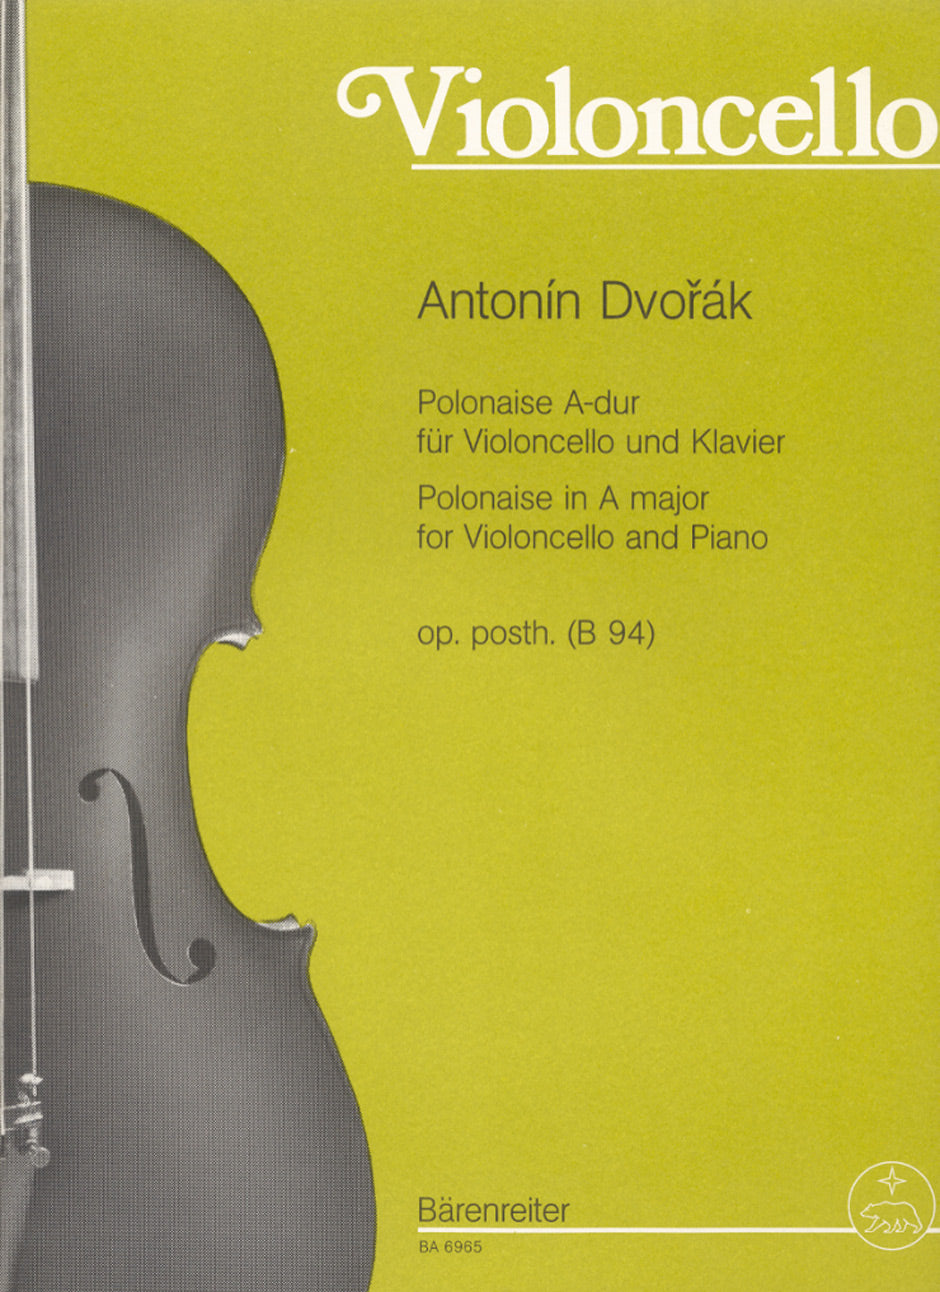 Dvorak Polonaise for Violoncello and Piano A major op. post. B 94